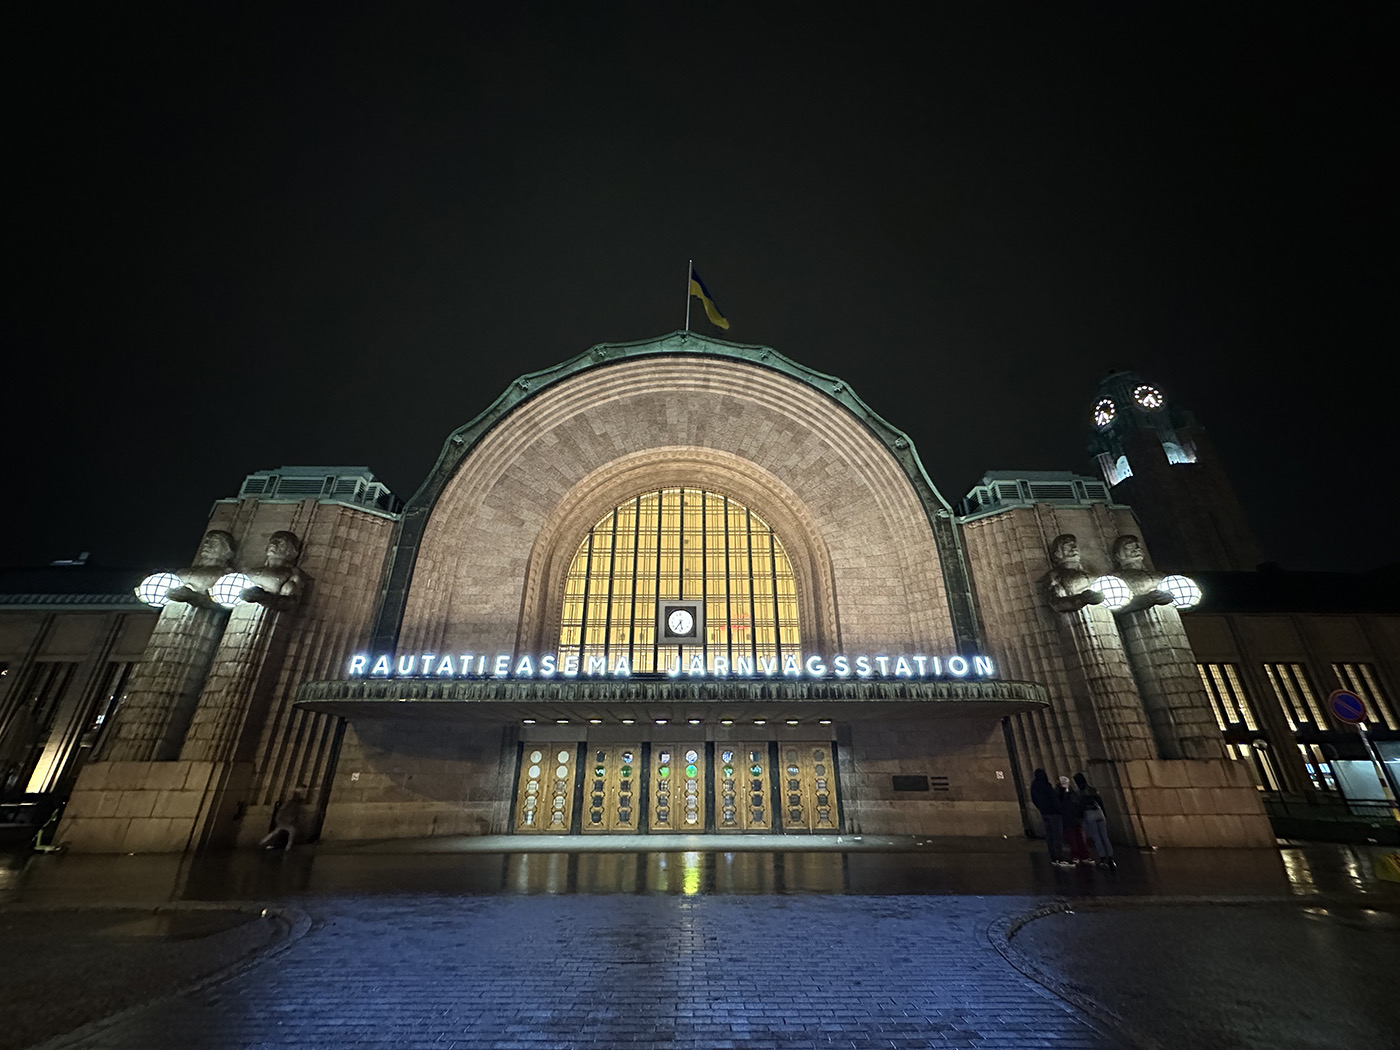 Helsinki Central Train Station